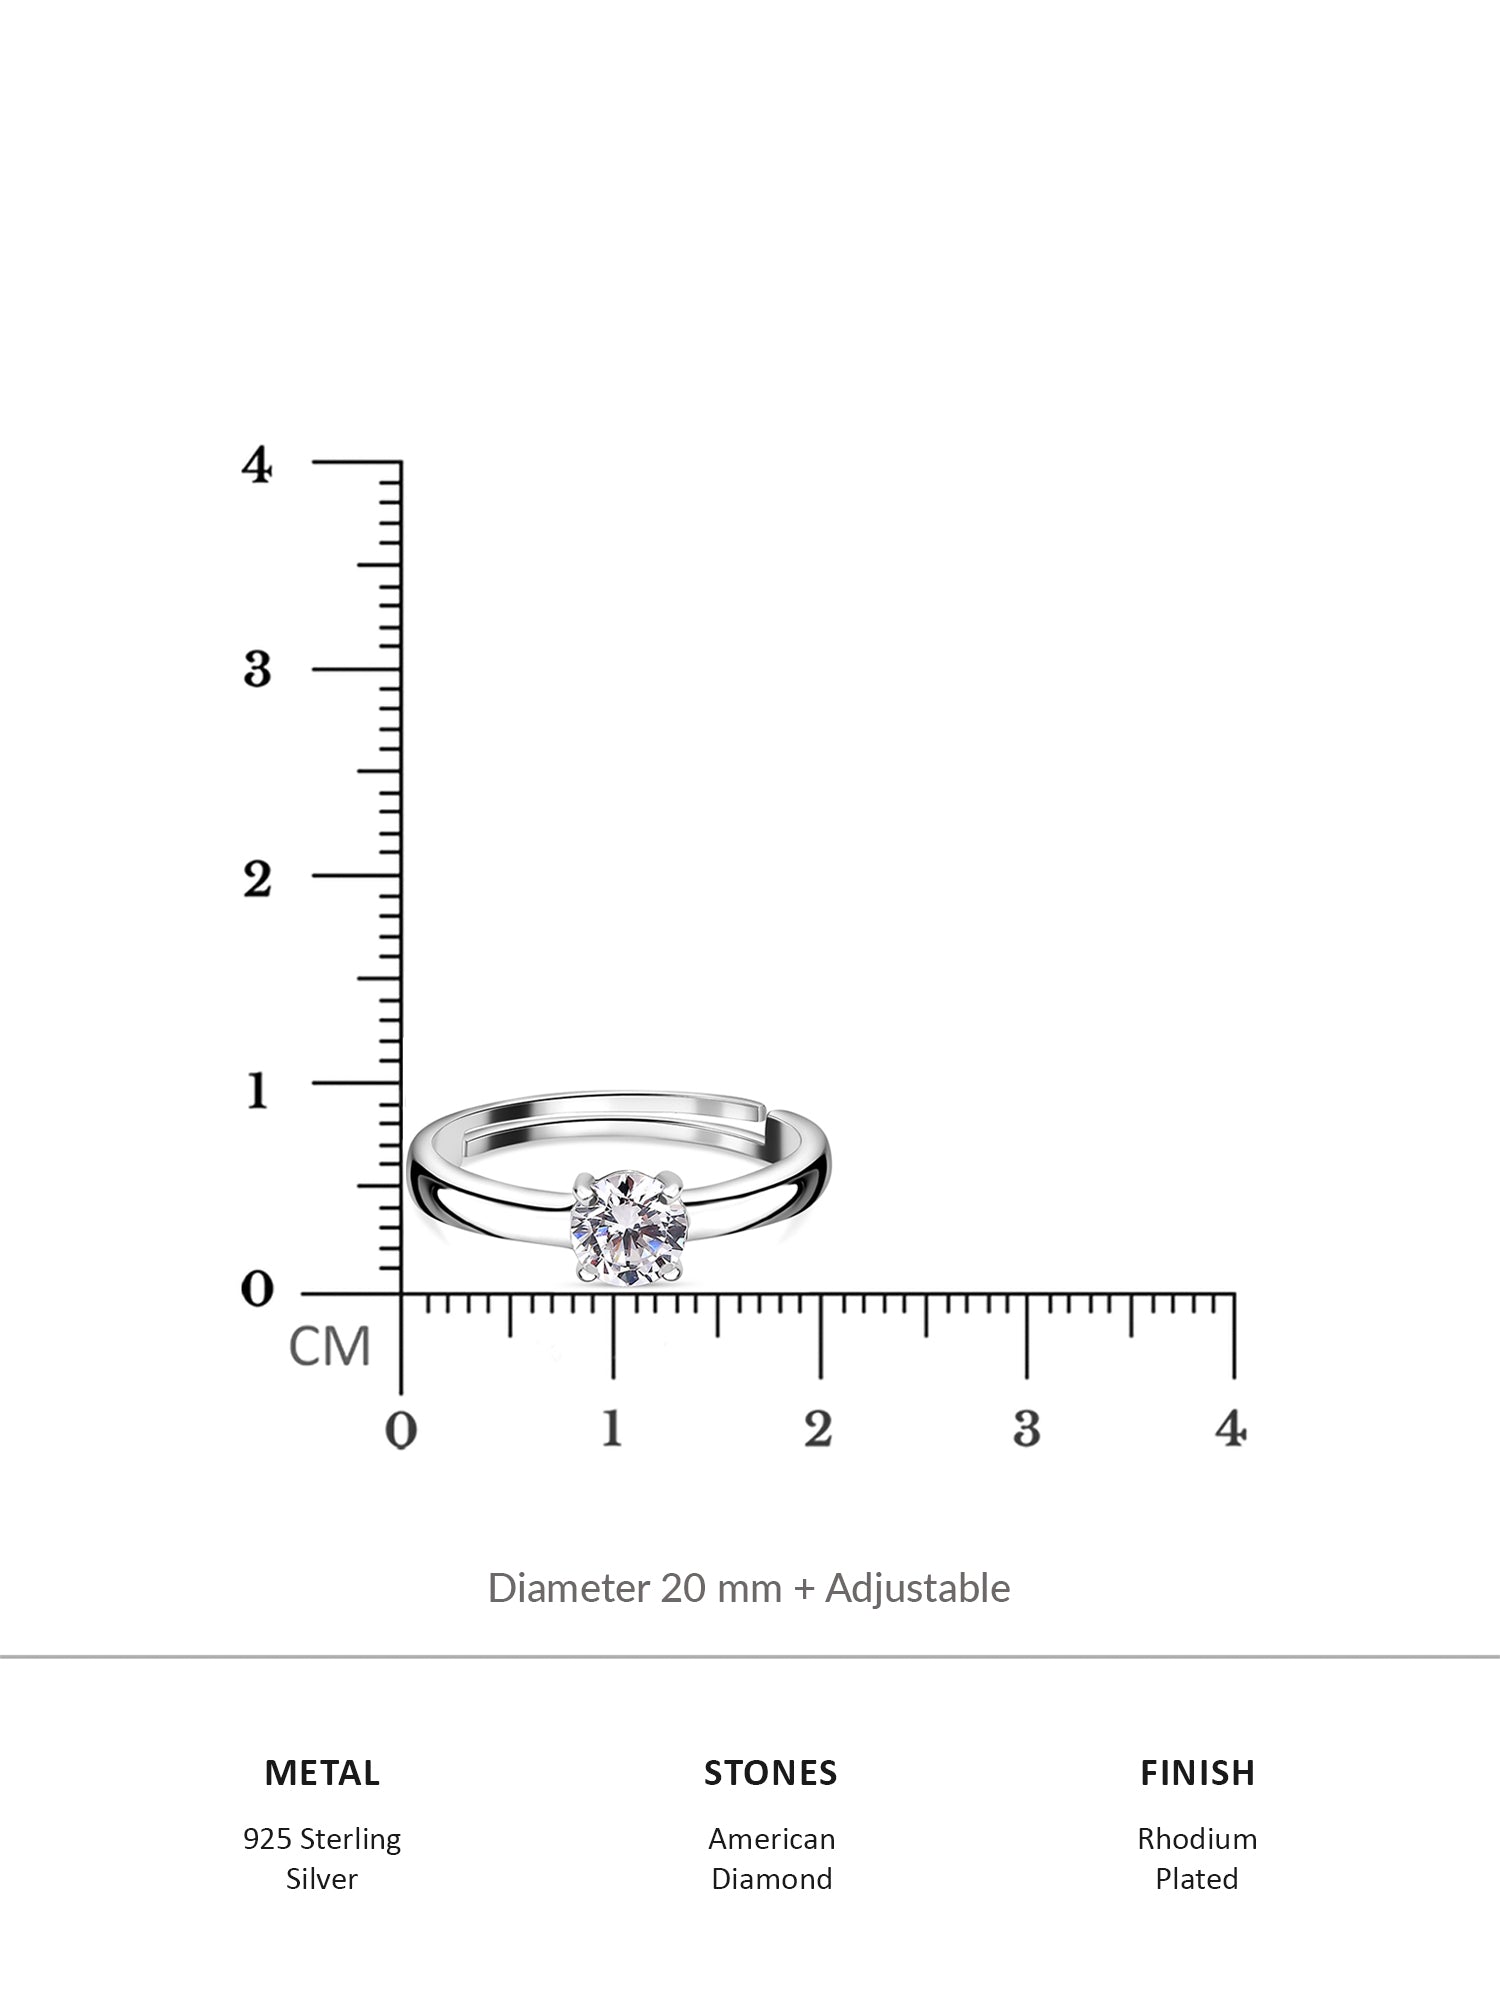 Ornate Jewels 0.8 Carat American Diamond Solitaire Adjustable Ring-4